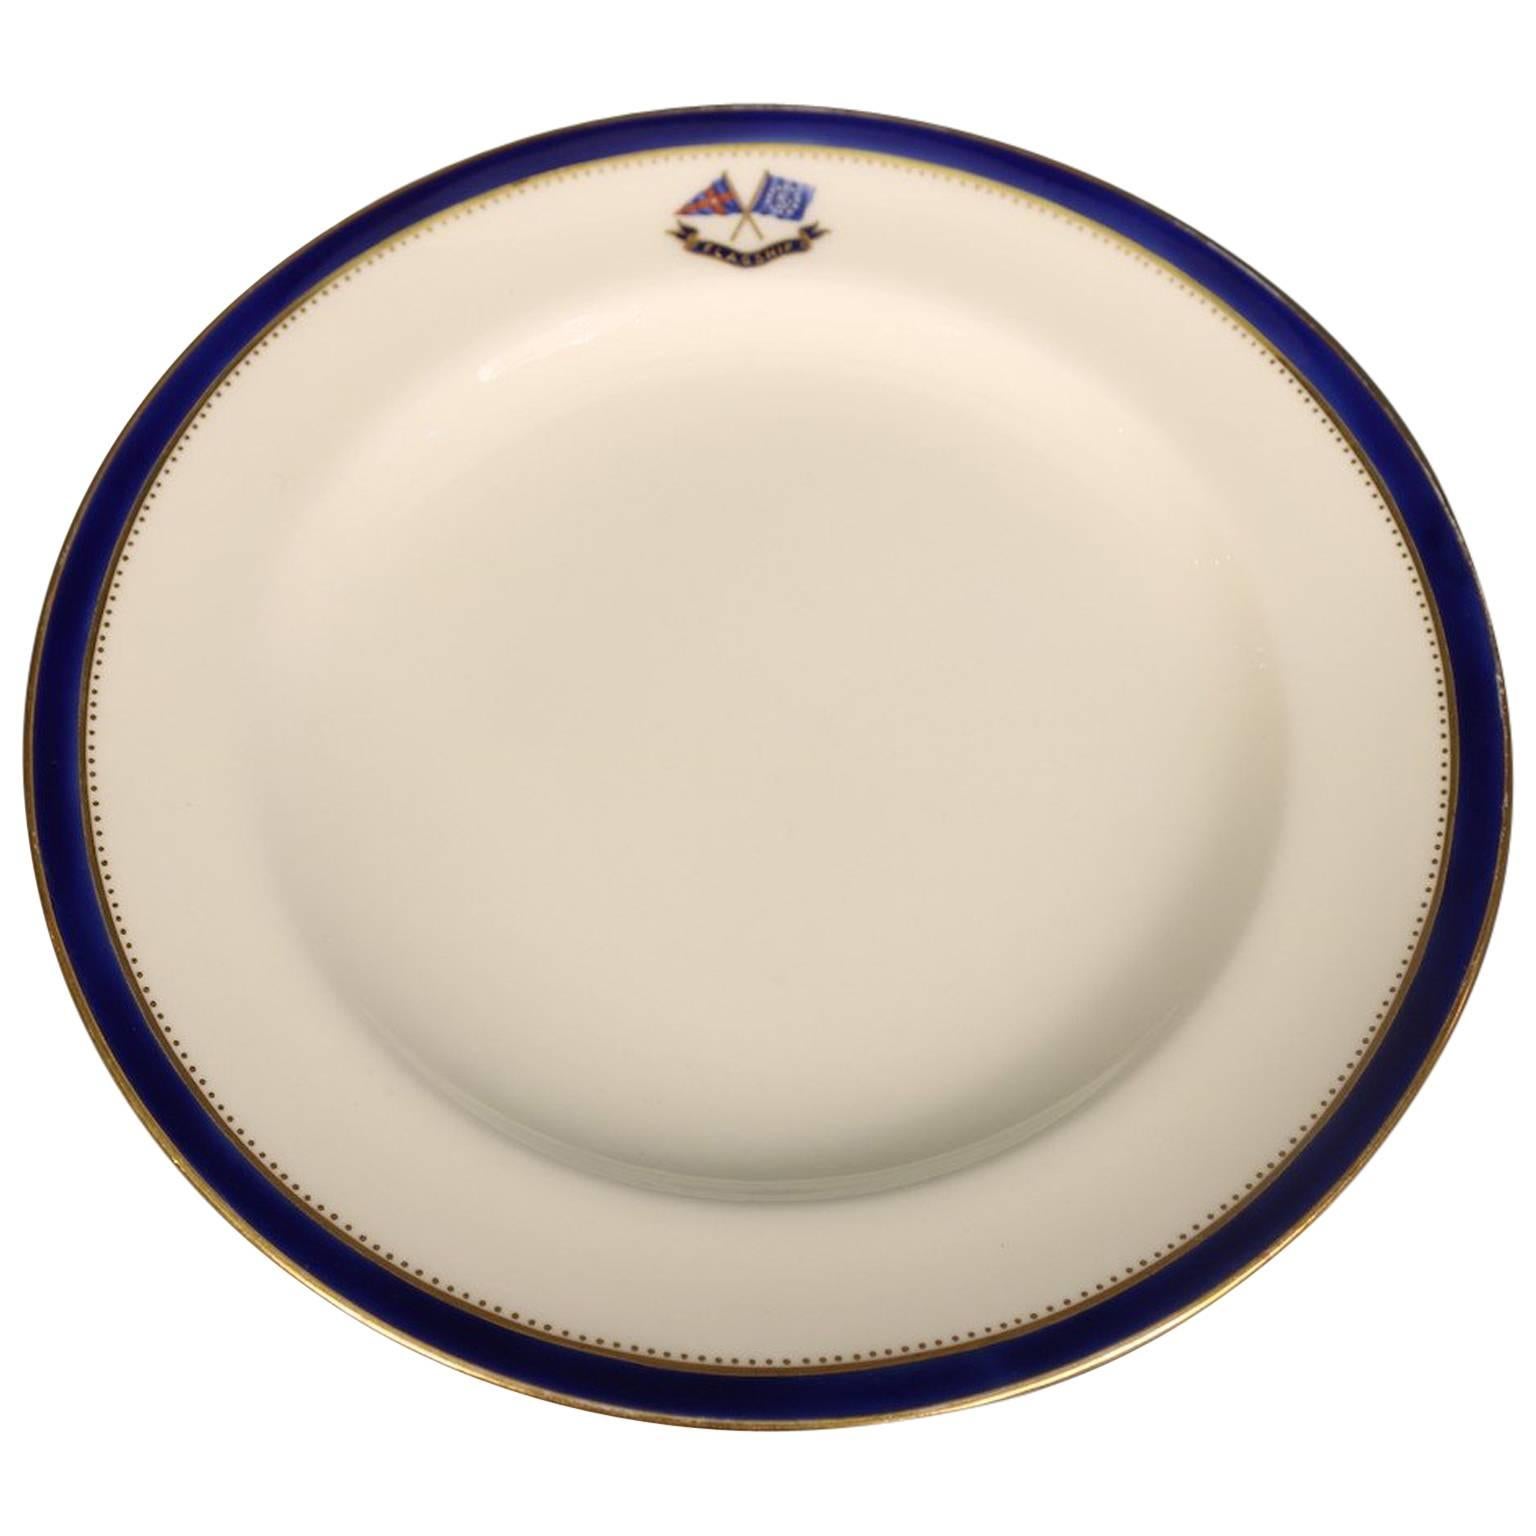 Flagship Luncheon Plate J. Pierpont Morgan’s Personal Dinnerware, circa 1890